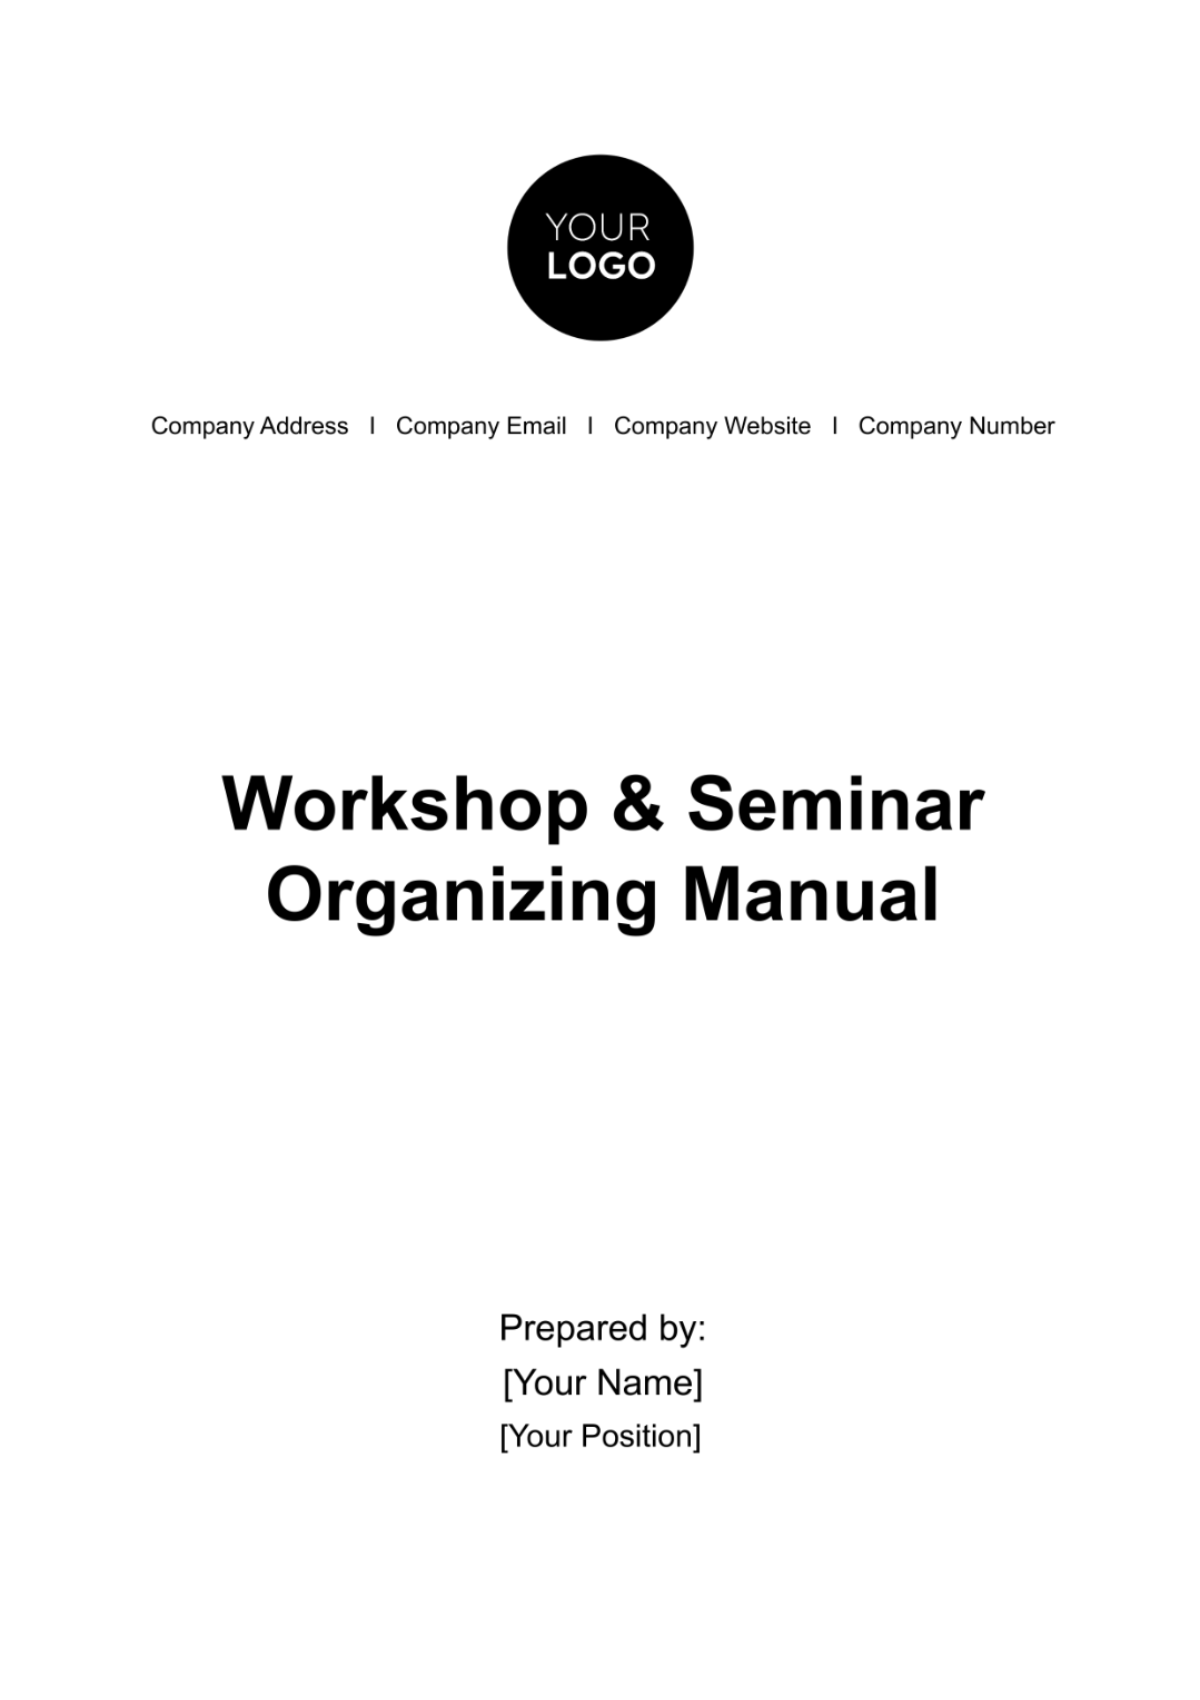 Workshop & Seminar Organizing Manual HR Template